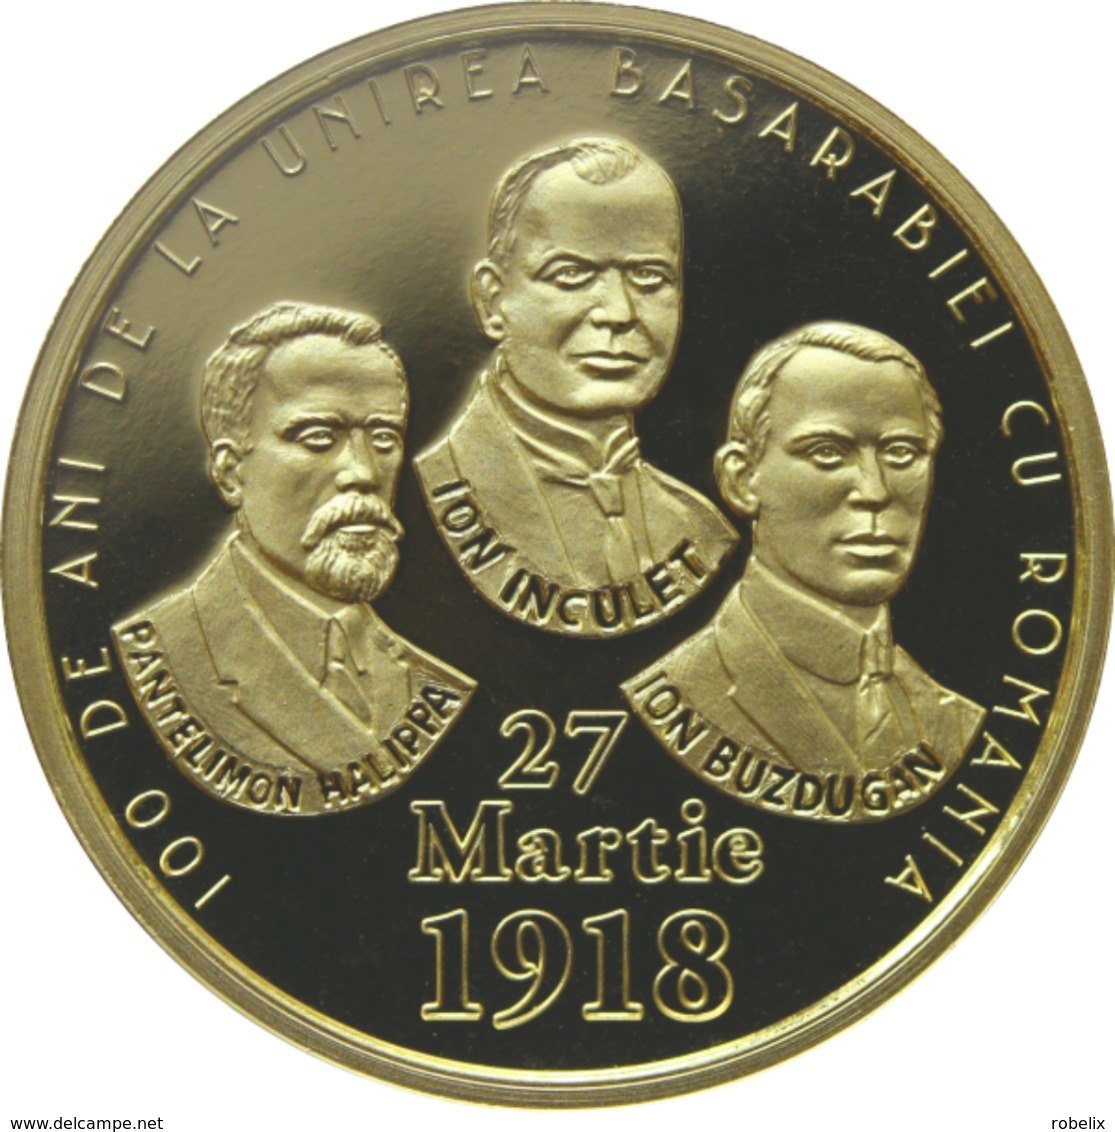 ROMANIA -2018-  50 BANI - COMMEMORATIVE COINS - 100 Years Since The Union Of Bessarabia With Romania PROOF (Rare) - Romania